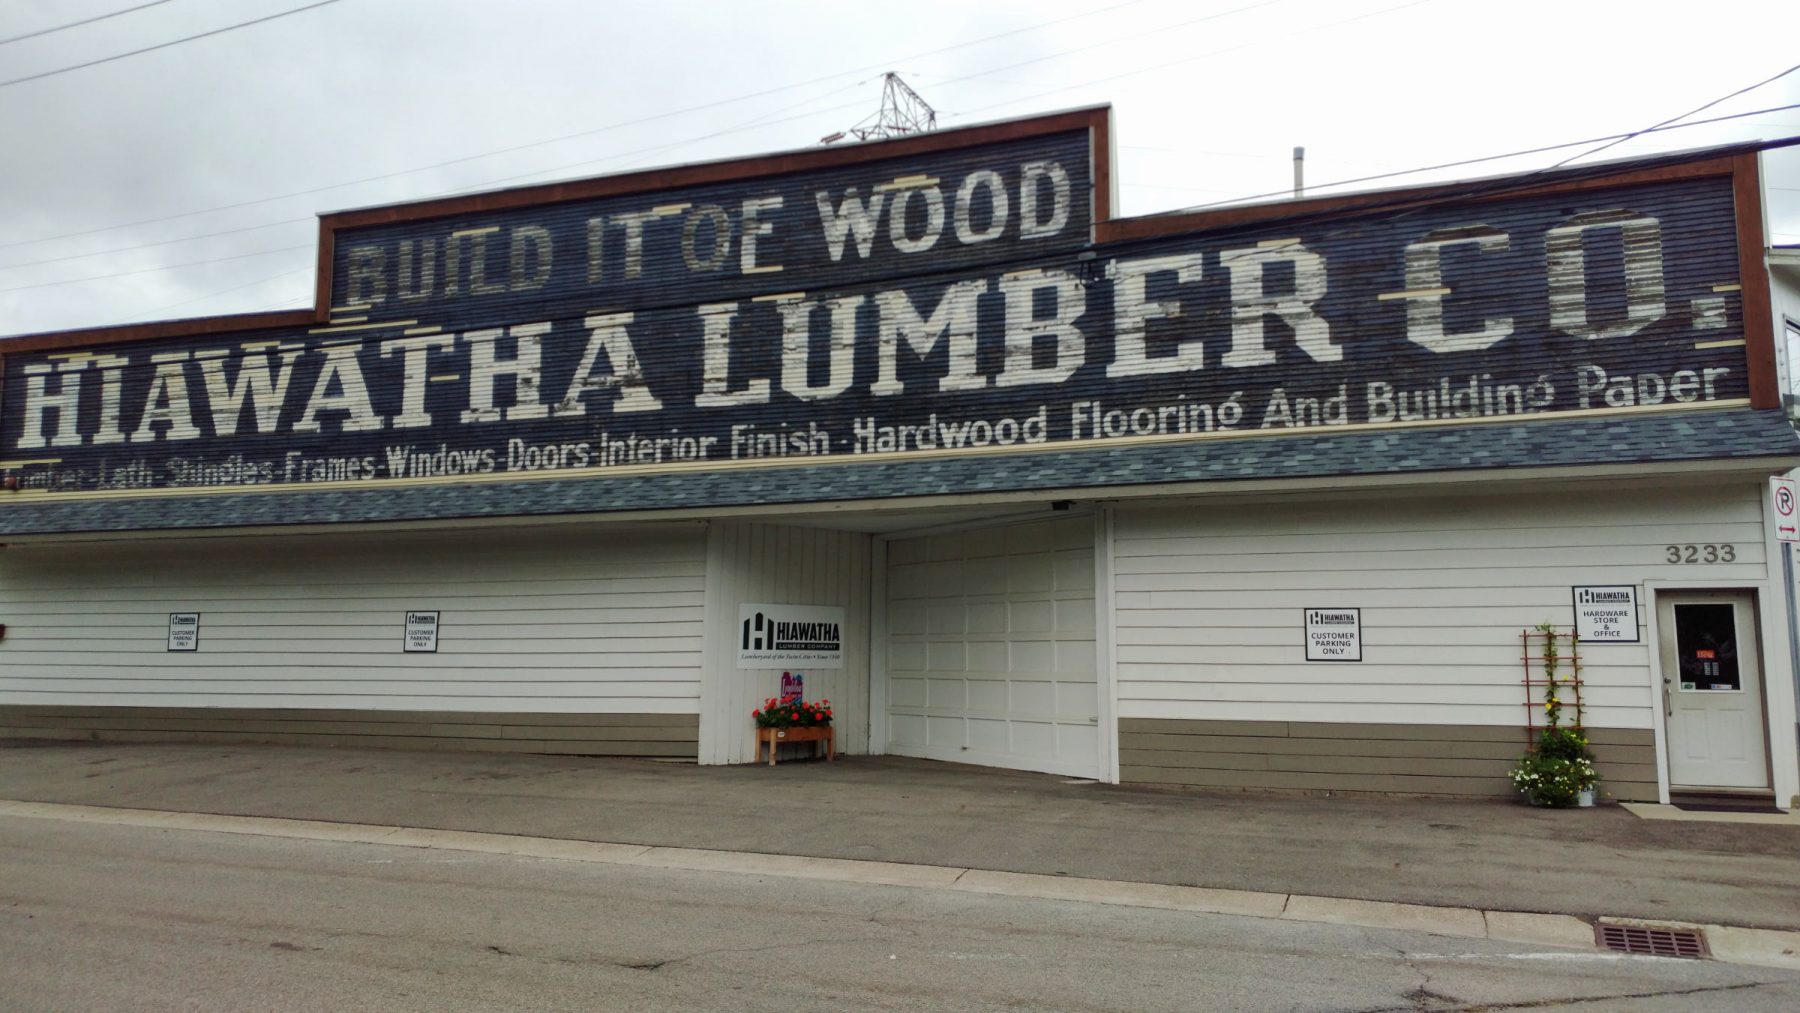 Hiawatha Lumber Co. building